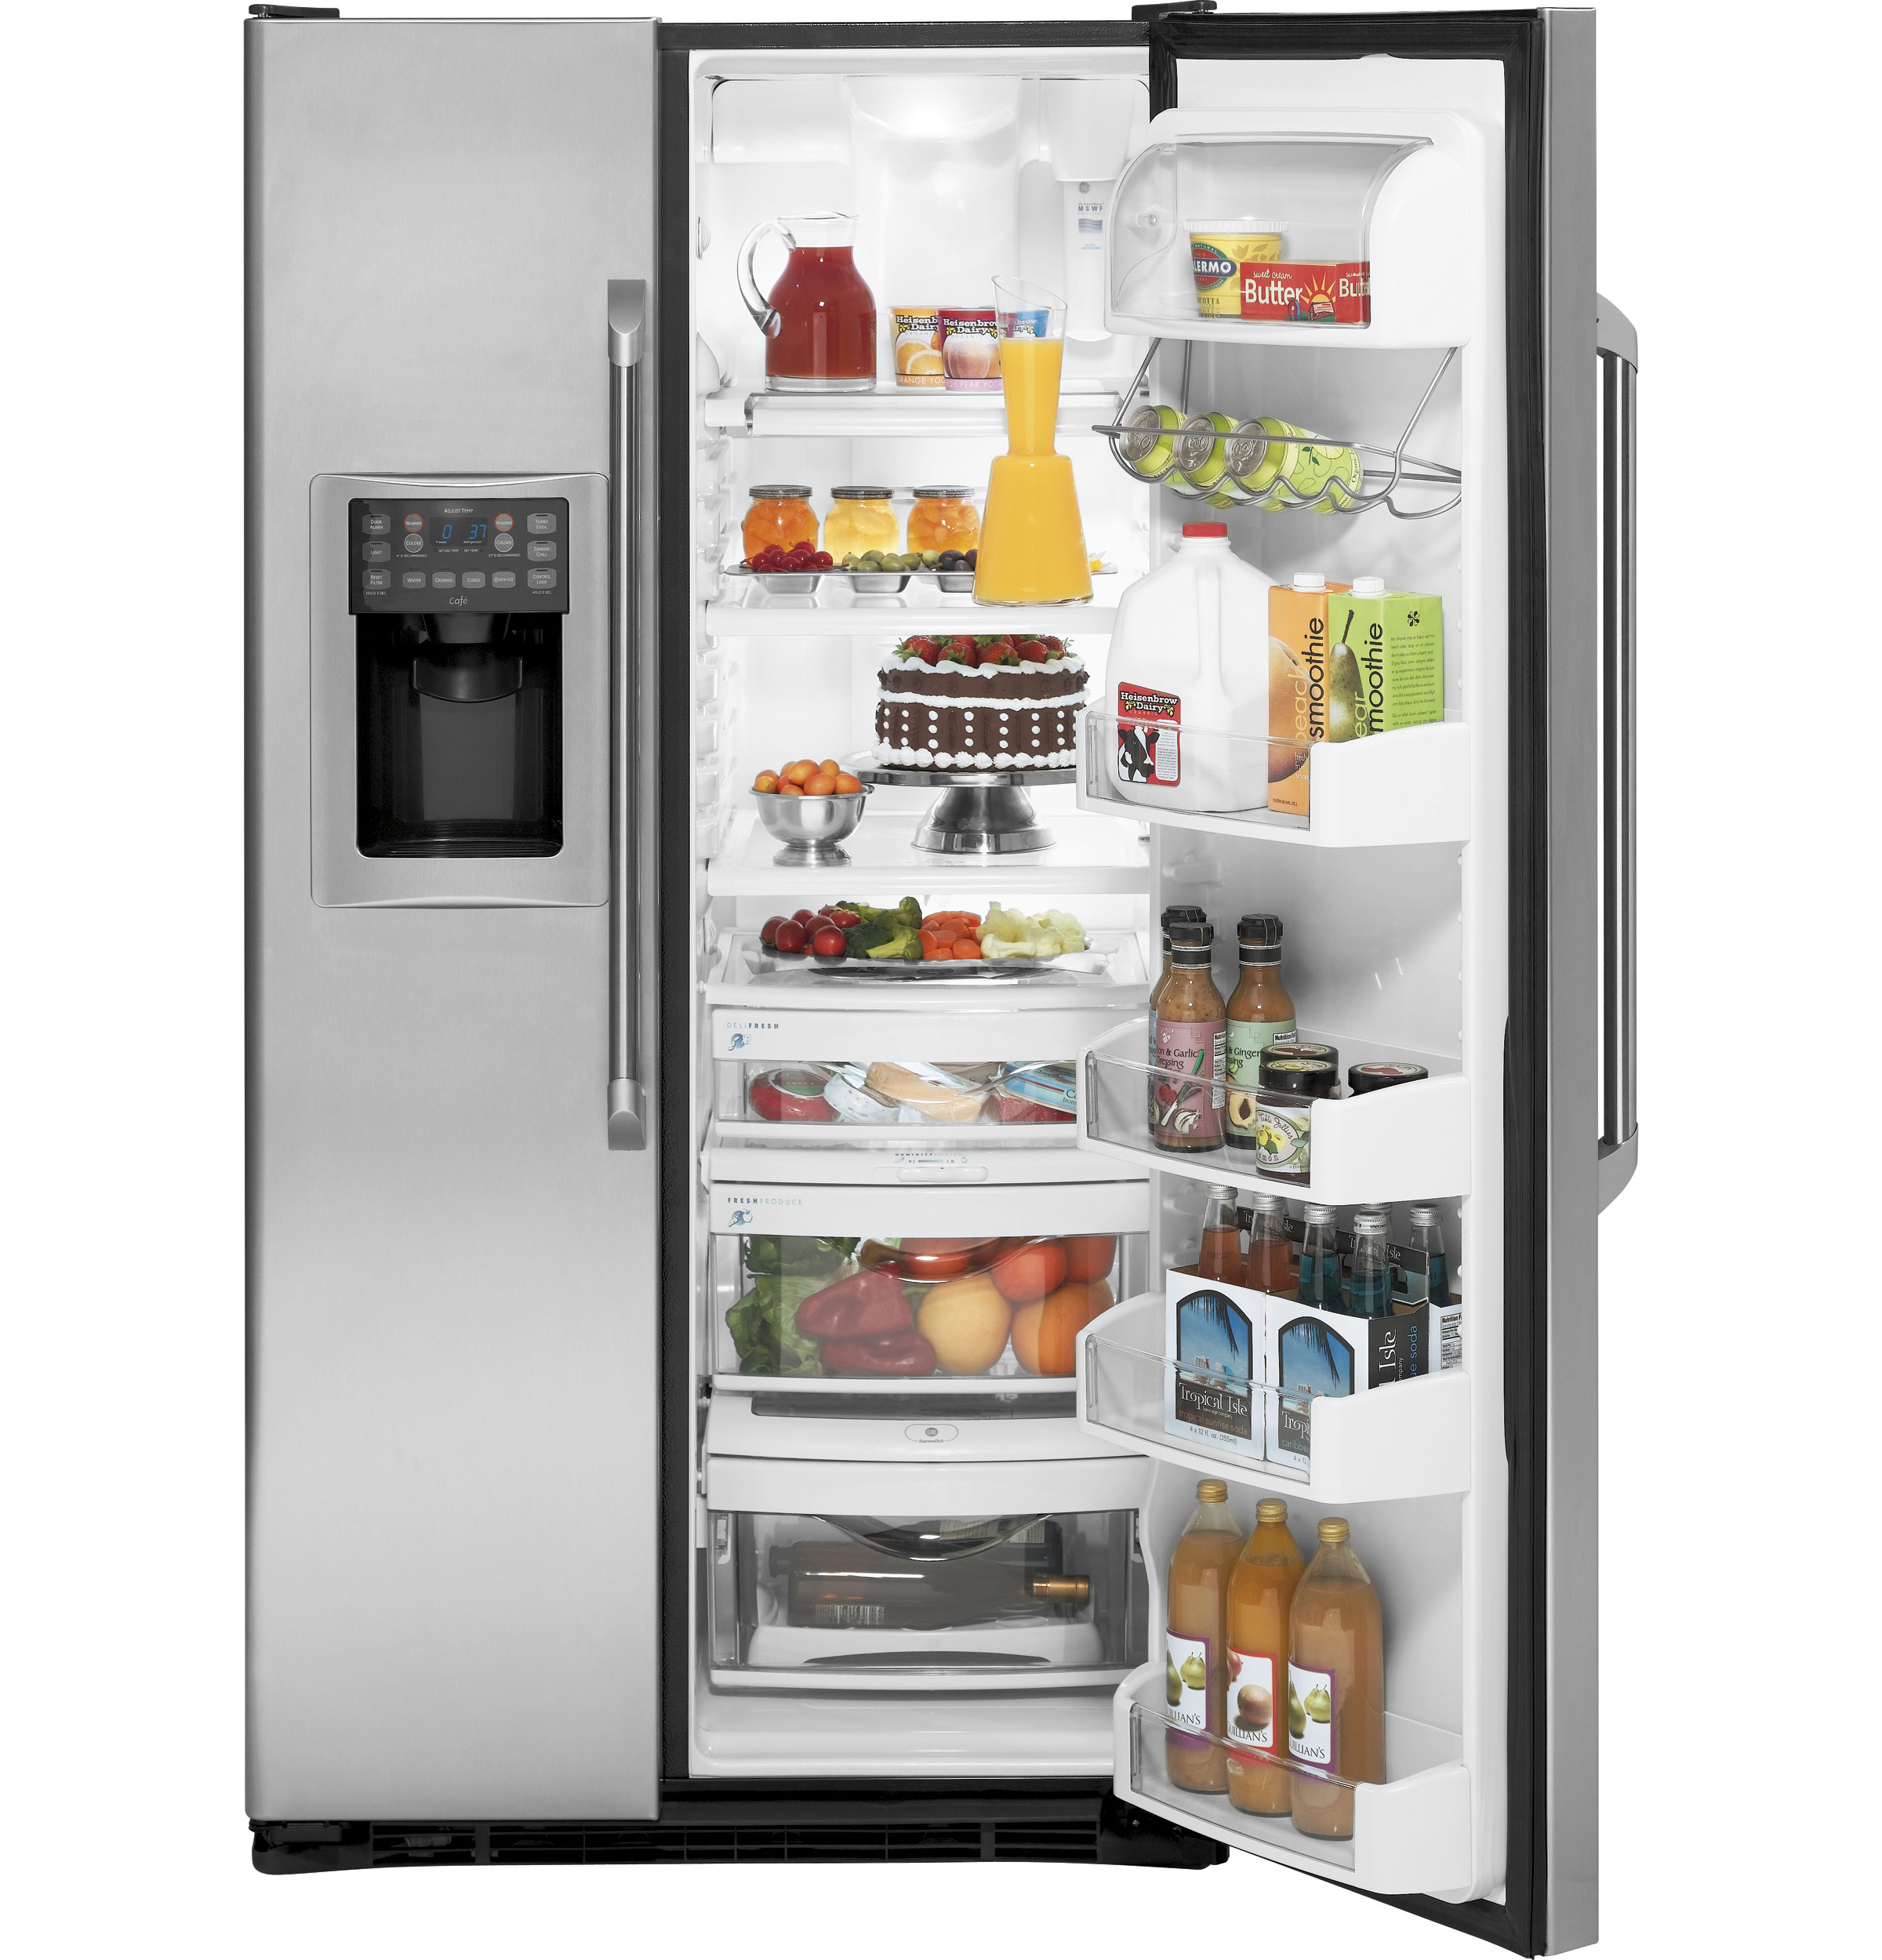 GE Café™ Series ENERGY STAR® 25.7 Cu. Ft. Side-By-Side Refrigerator